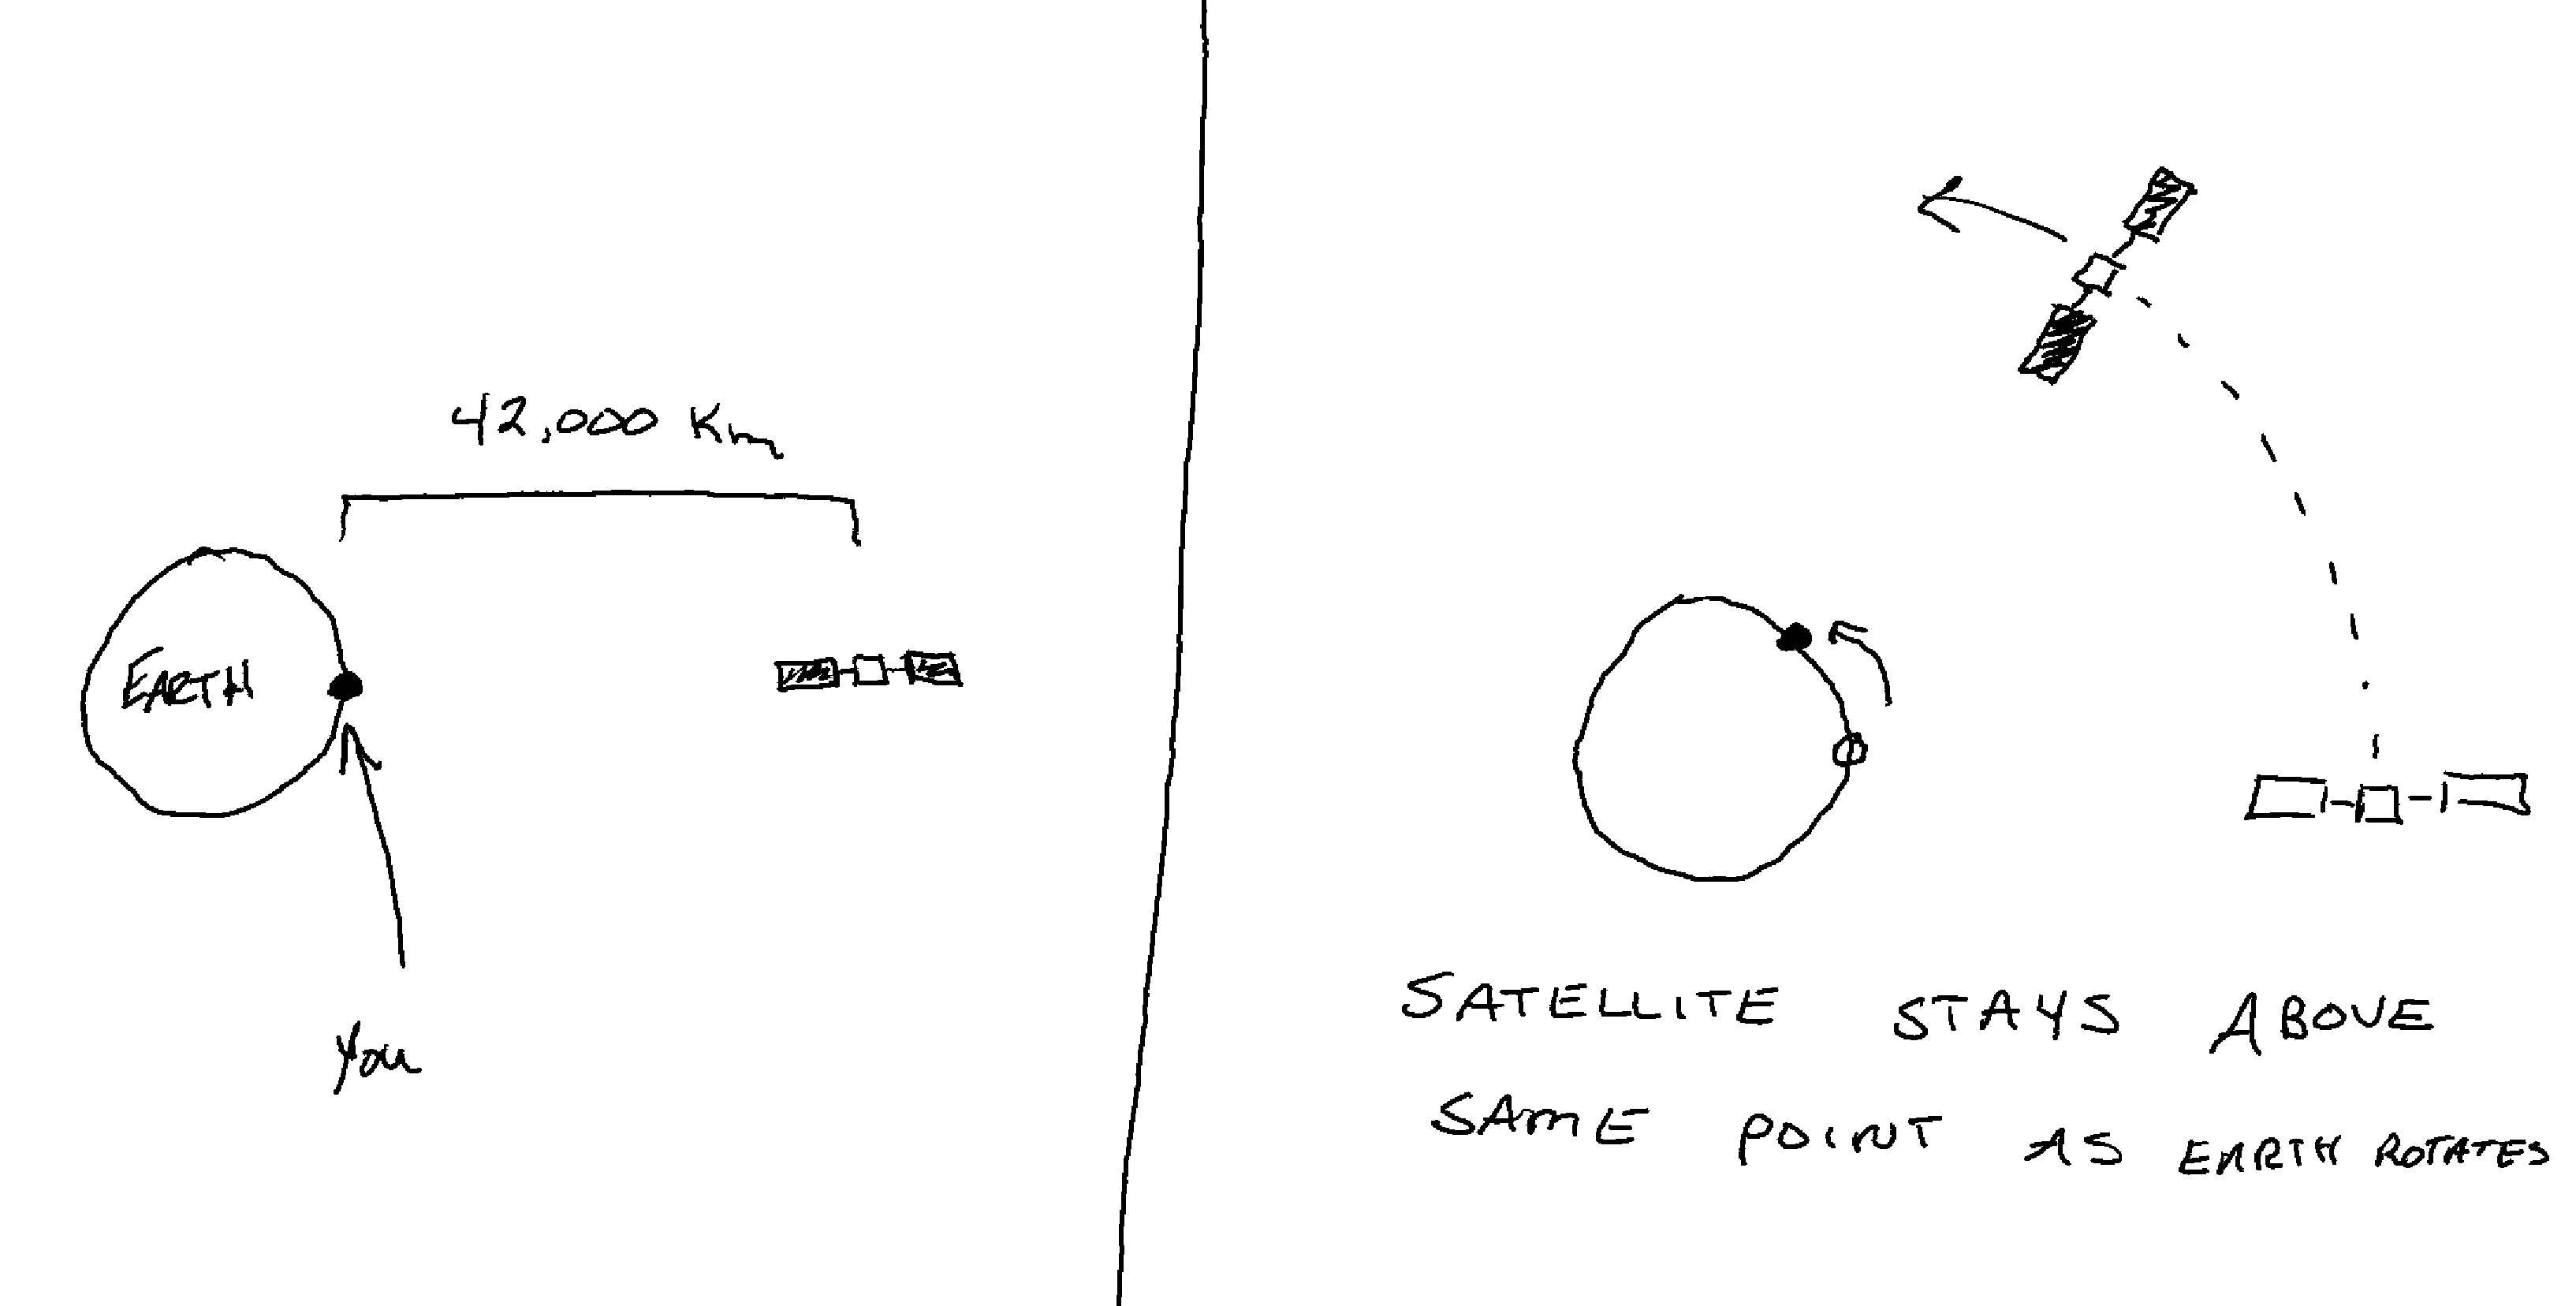 A diagram of a geostationary orbit